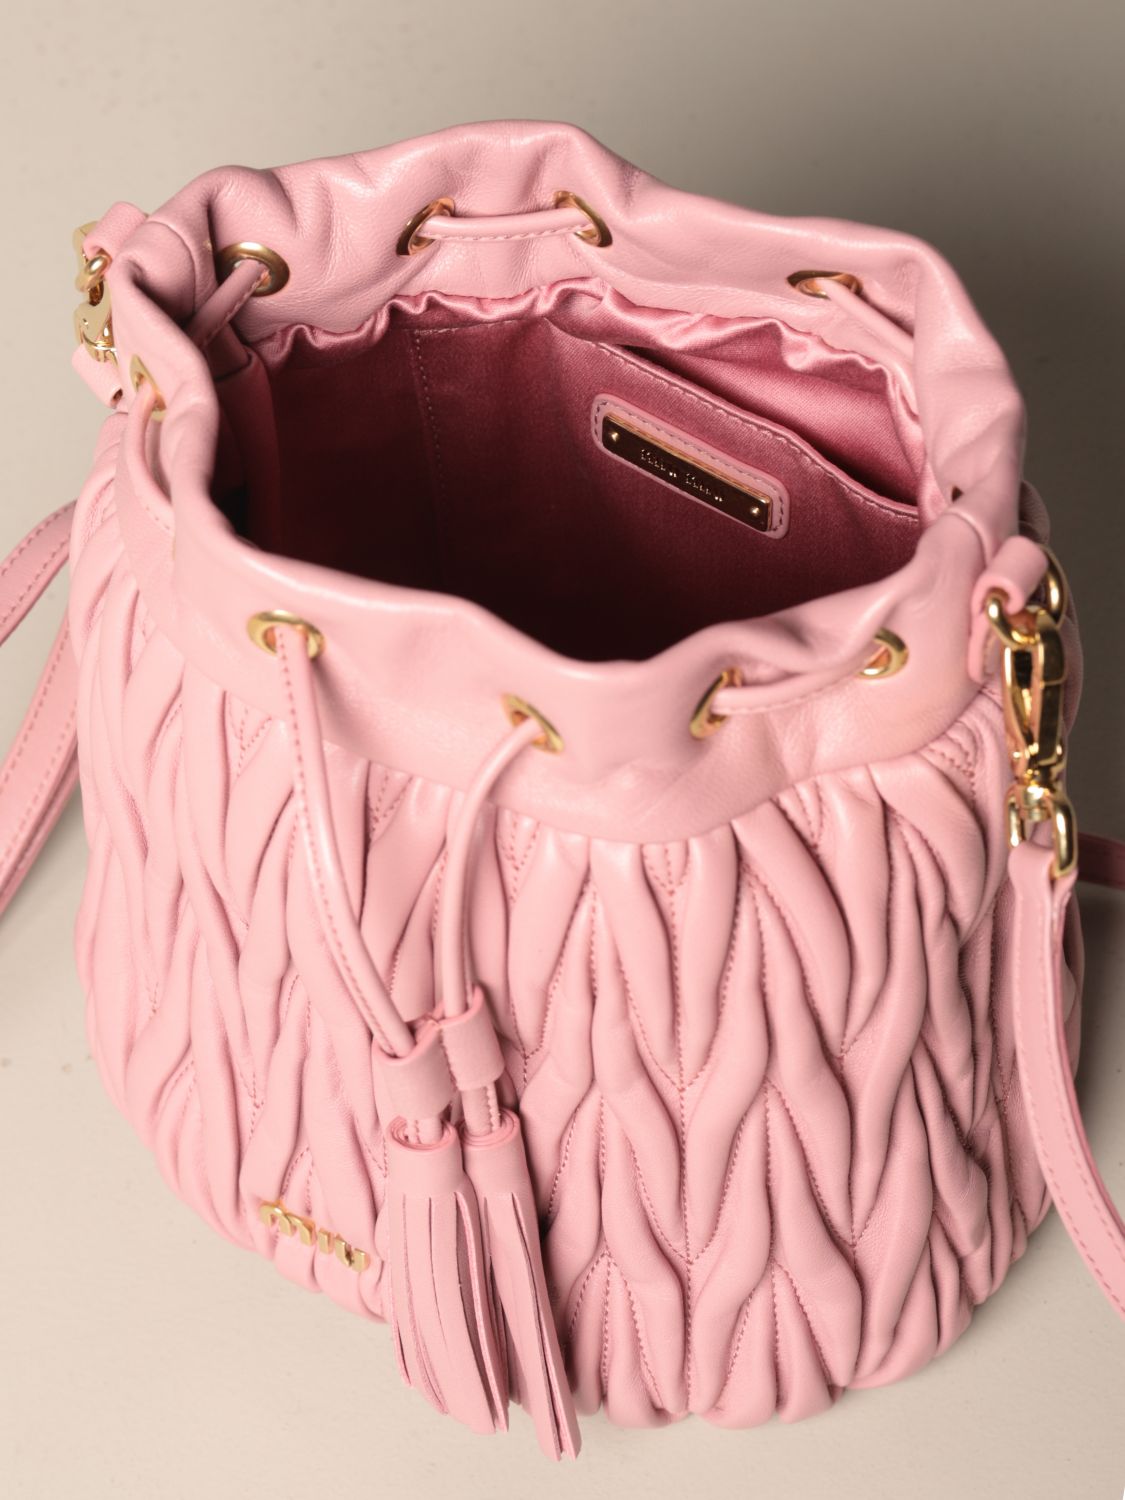 Miu Miu Matelasse Leather Convertible Clutch Shoulder Bag Pink 5BH057